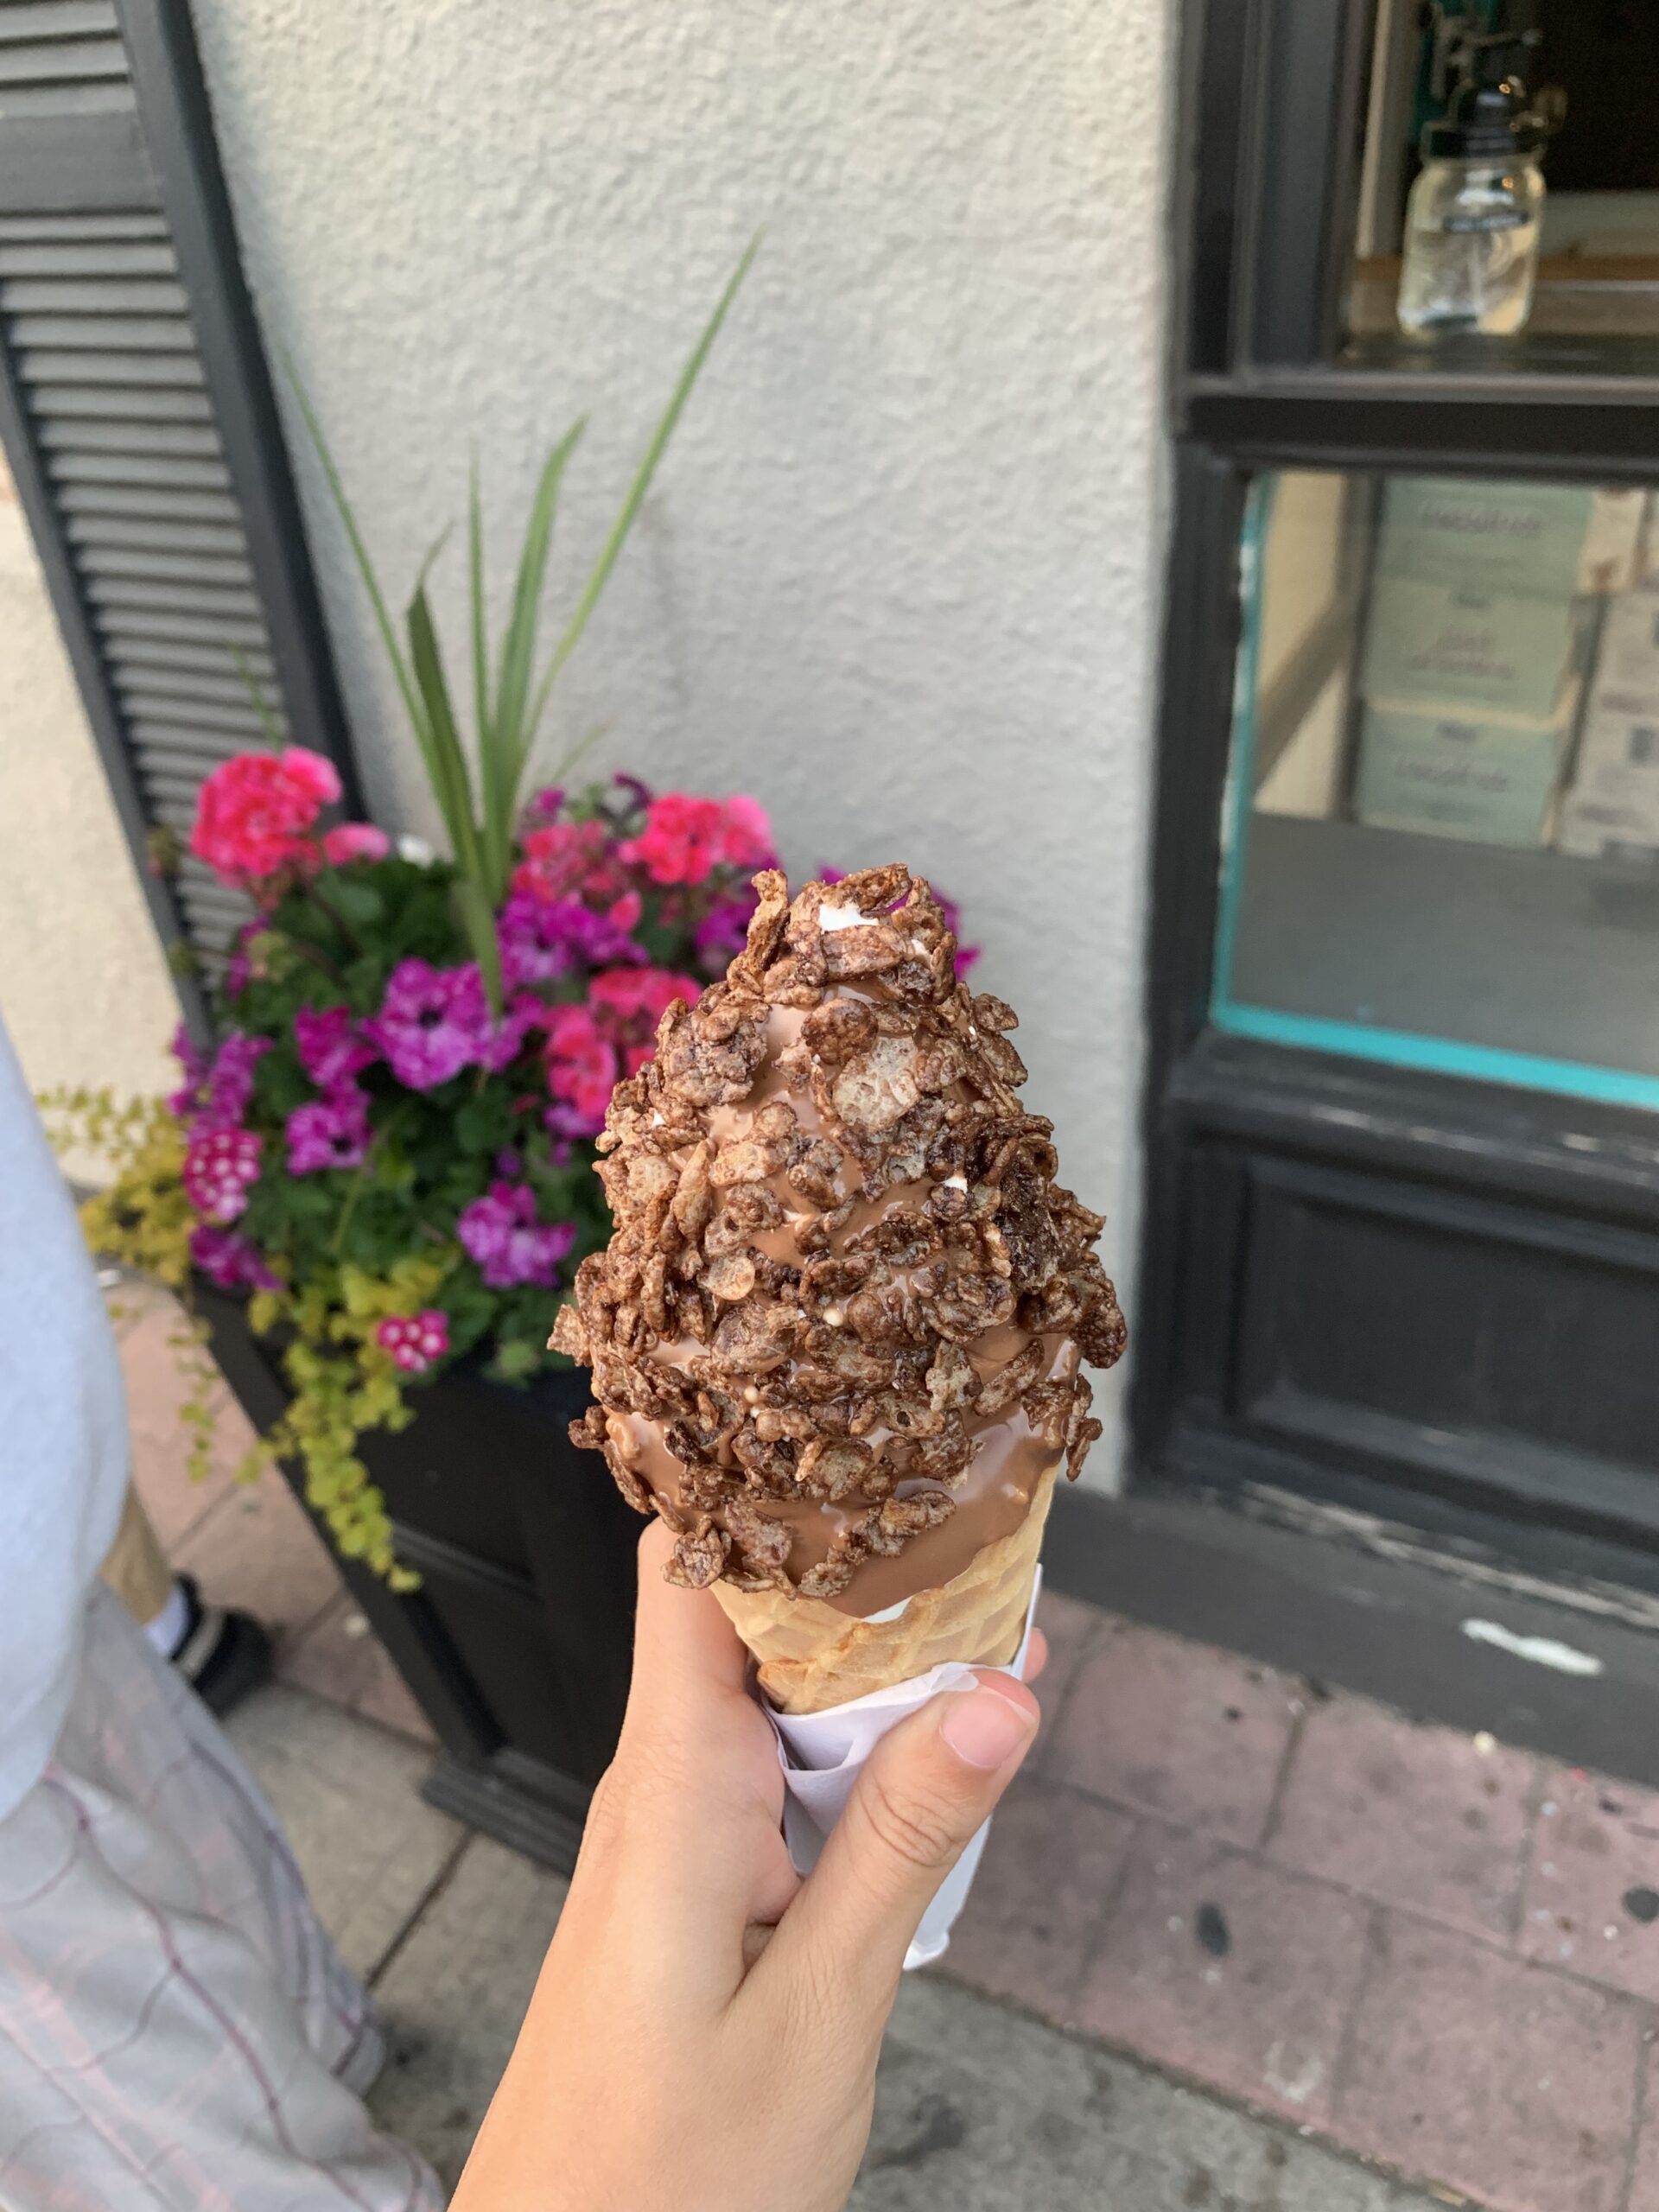 Canada Trip Day 1: Shawarma and Ice Cream